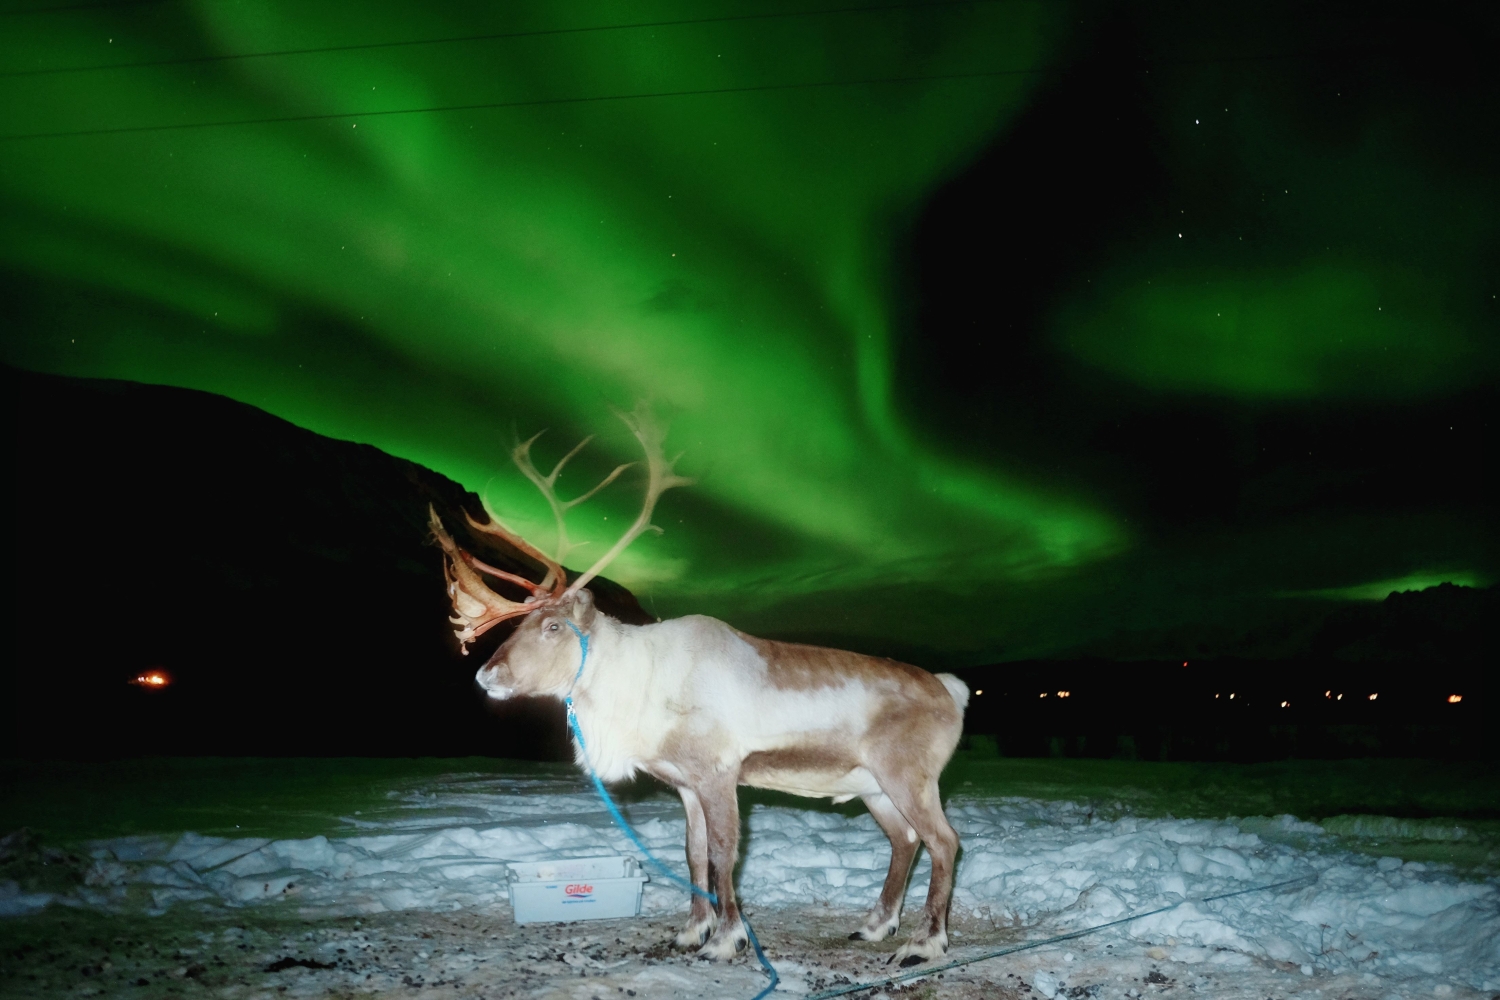 Reindeer Sledding and Northern Lights